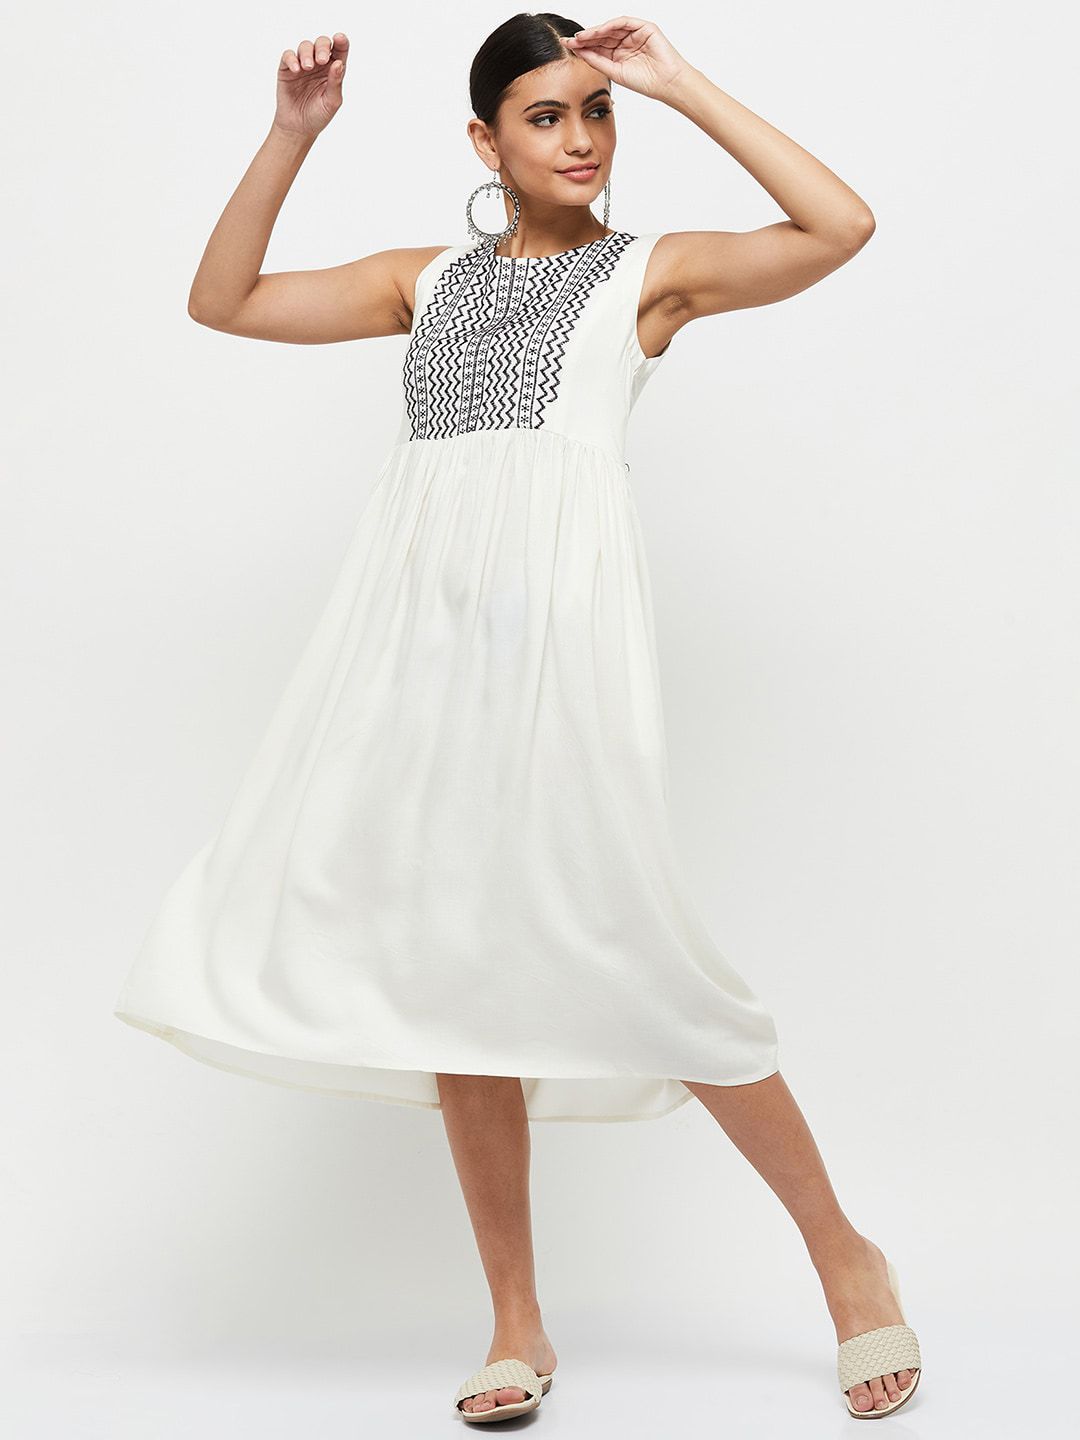 max White A-Line Dress Price in India